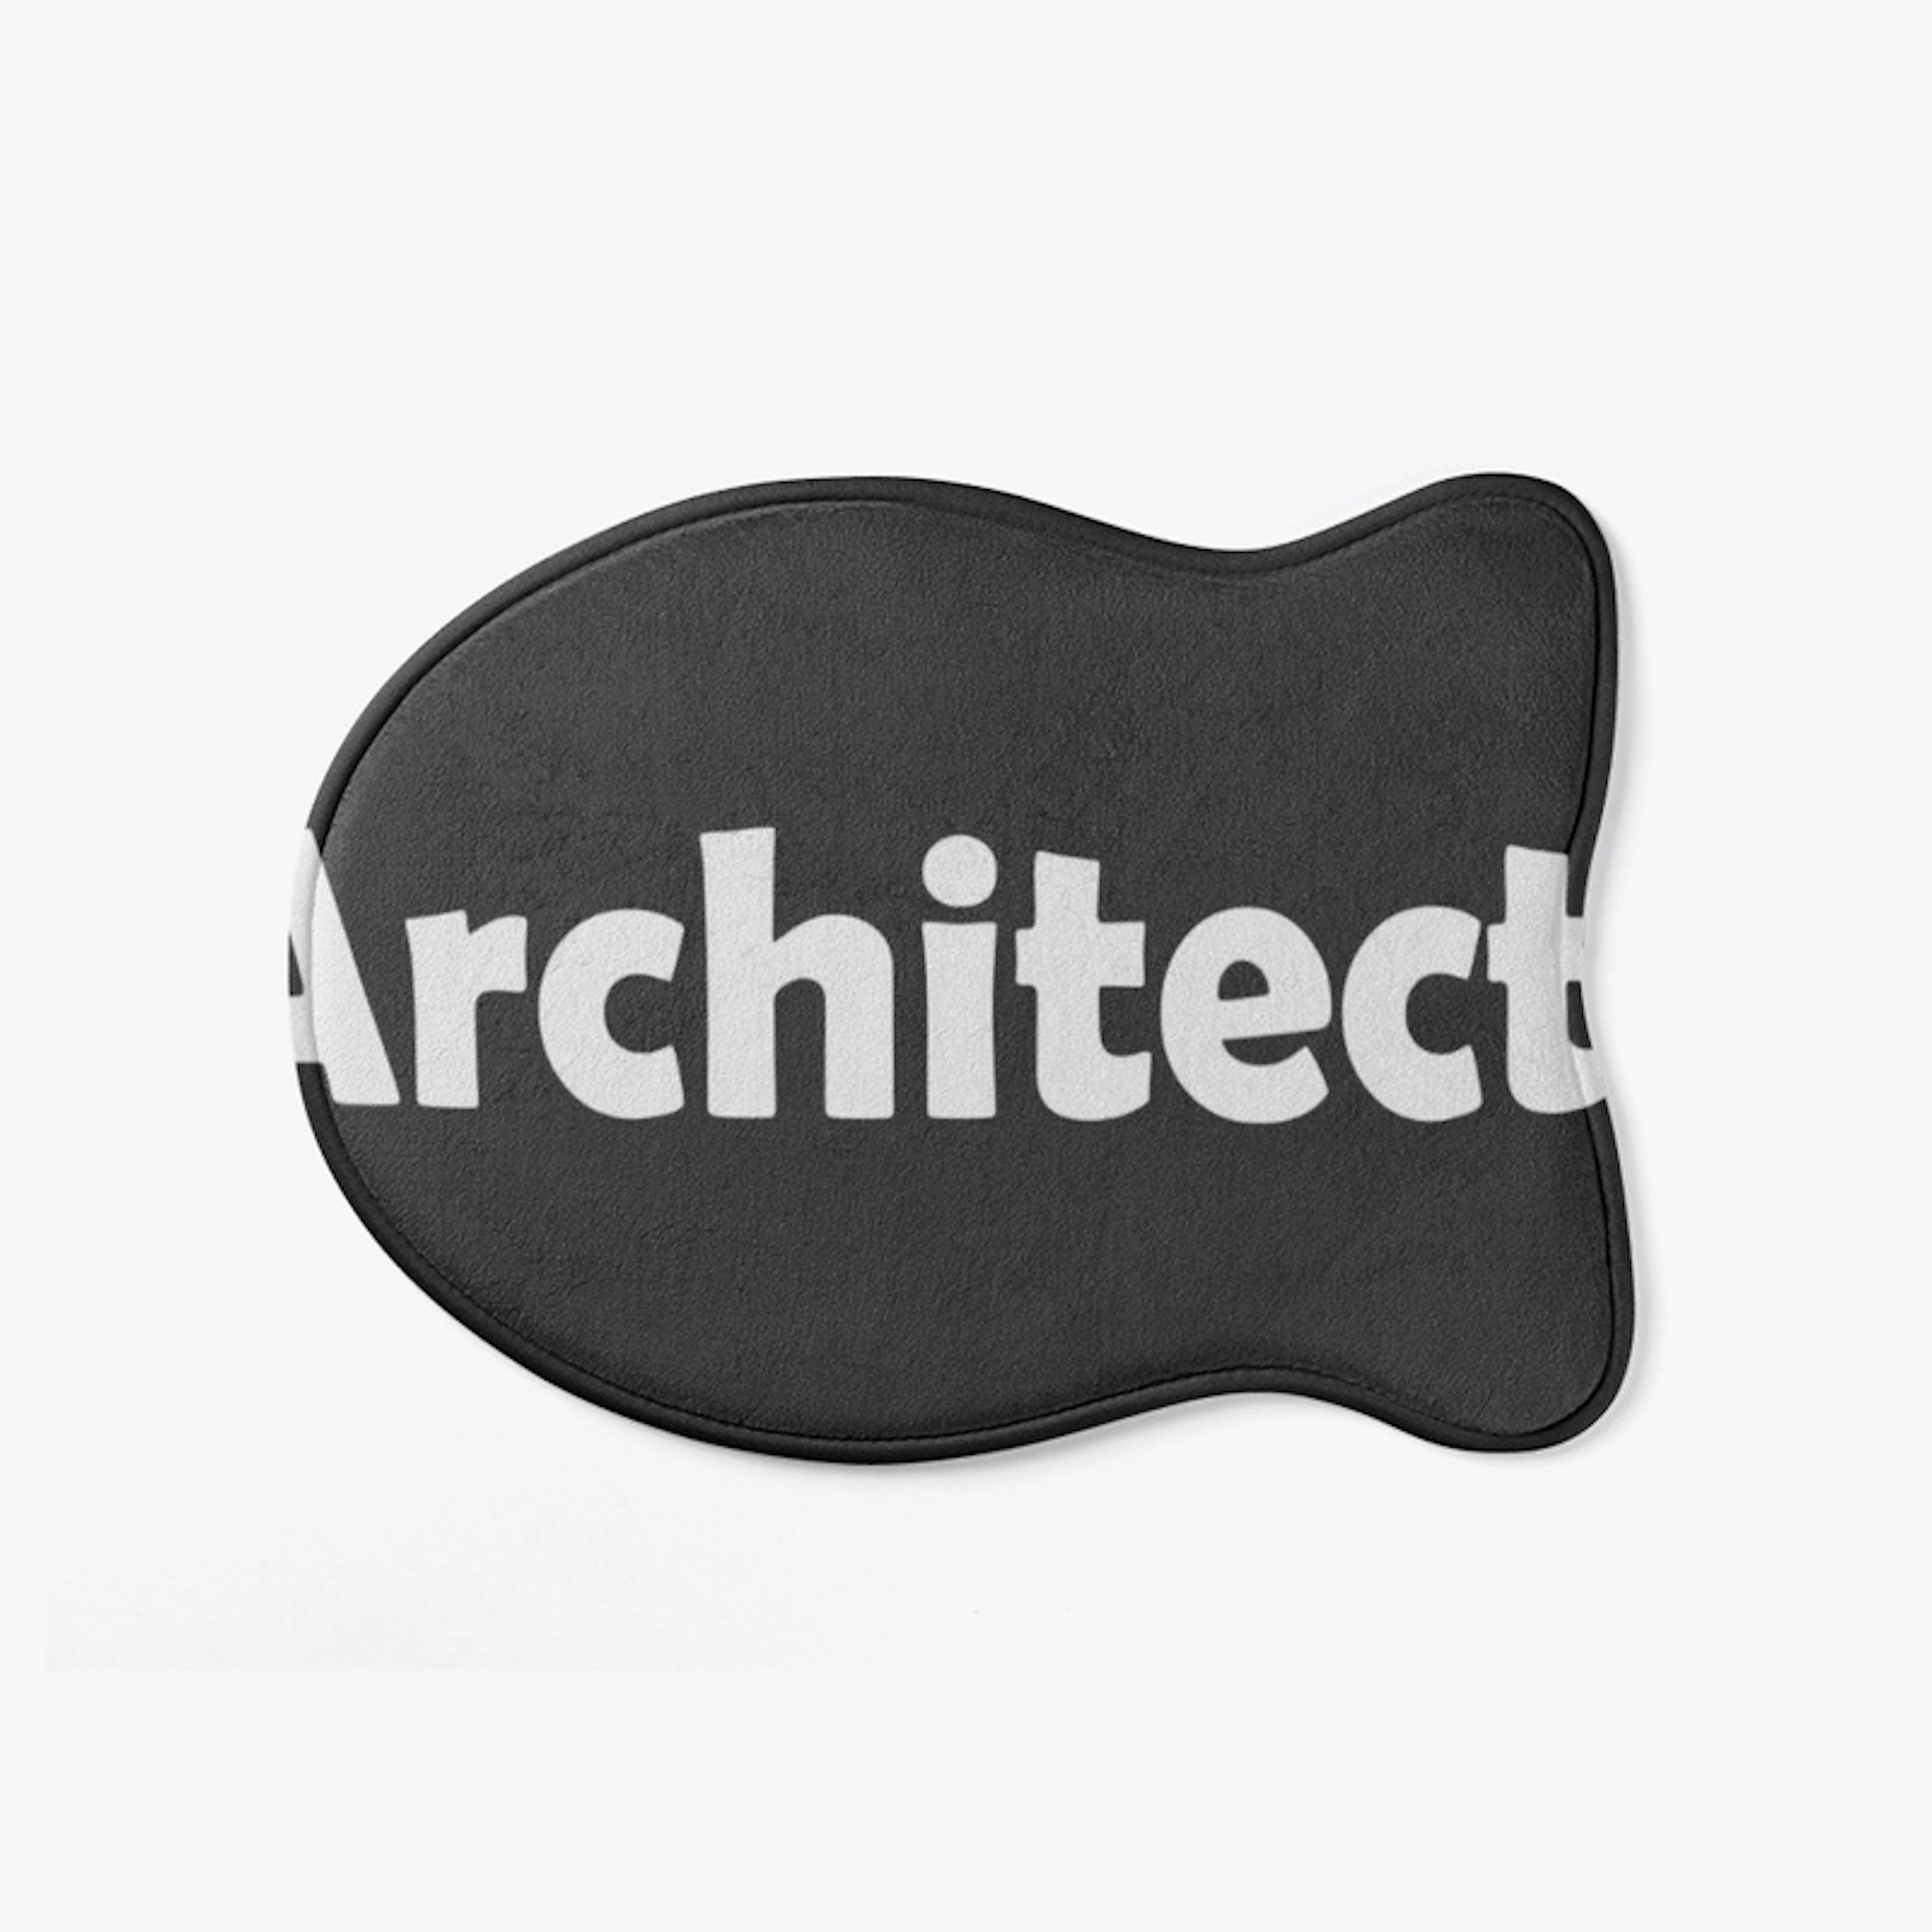 Architects Merch Logo